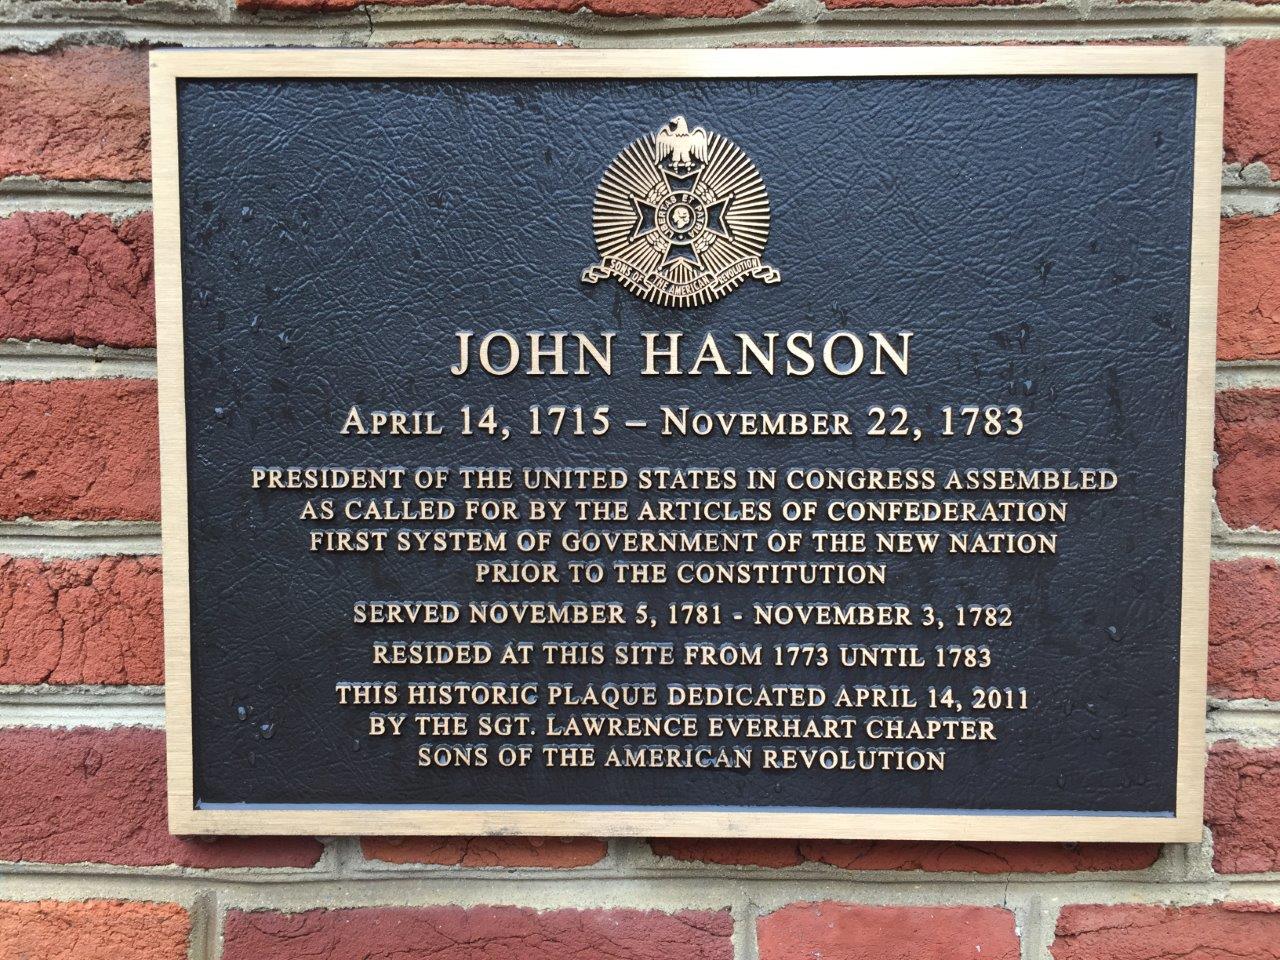 John Hanson statue in Frederick, Maryland